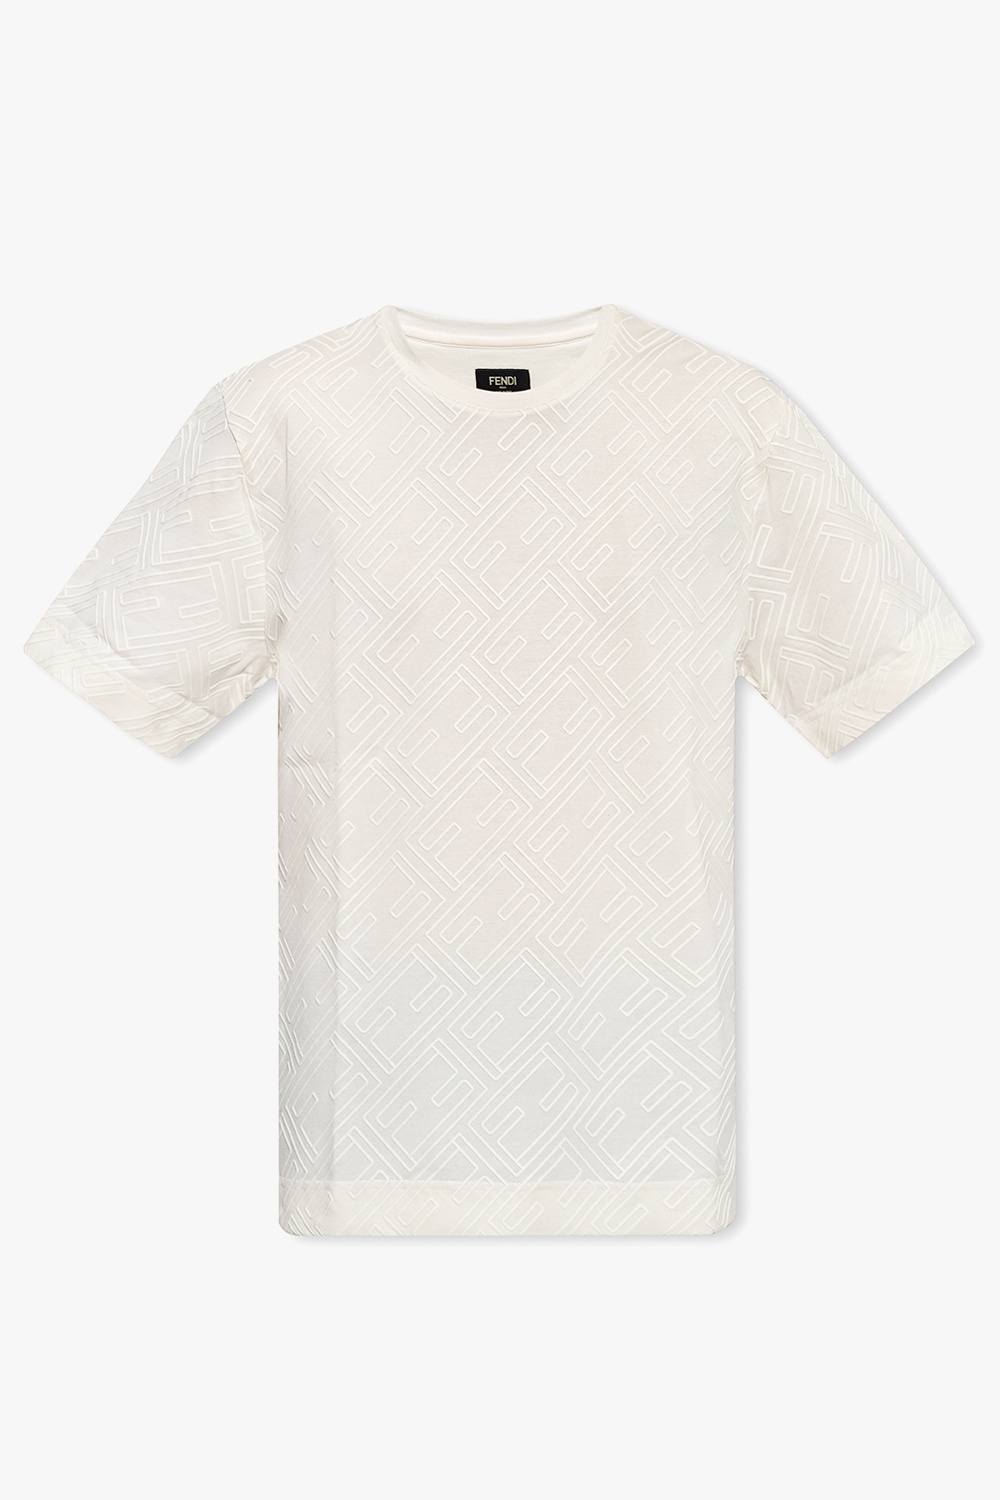 Louis Vuitton White Monogram Cotton Toweling T-Shirt XXL Louis Vuitton